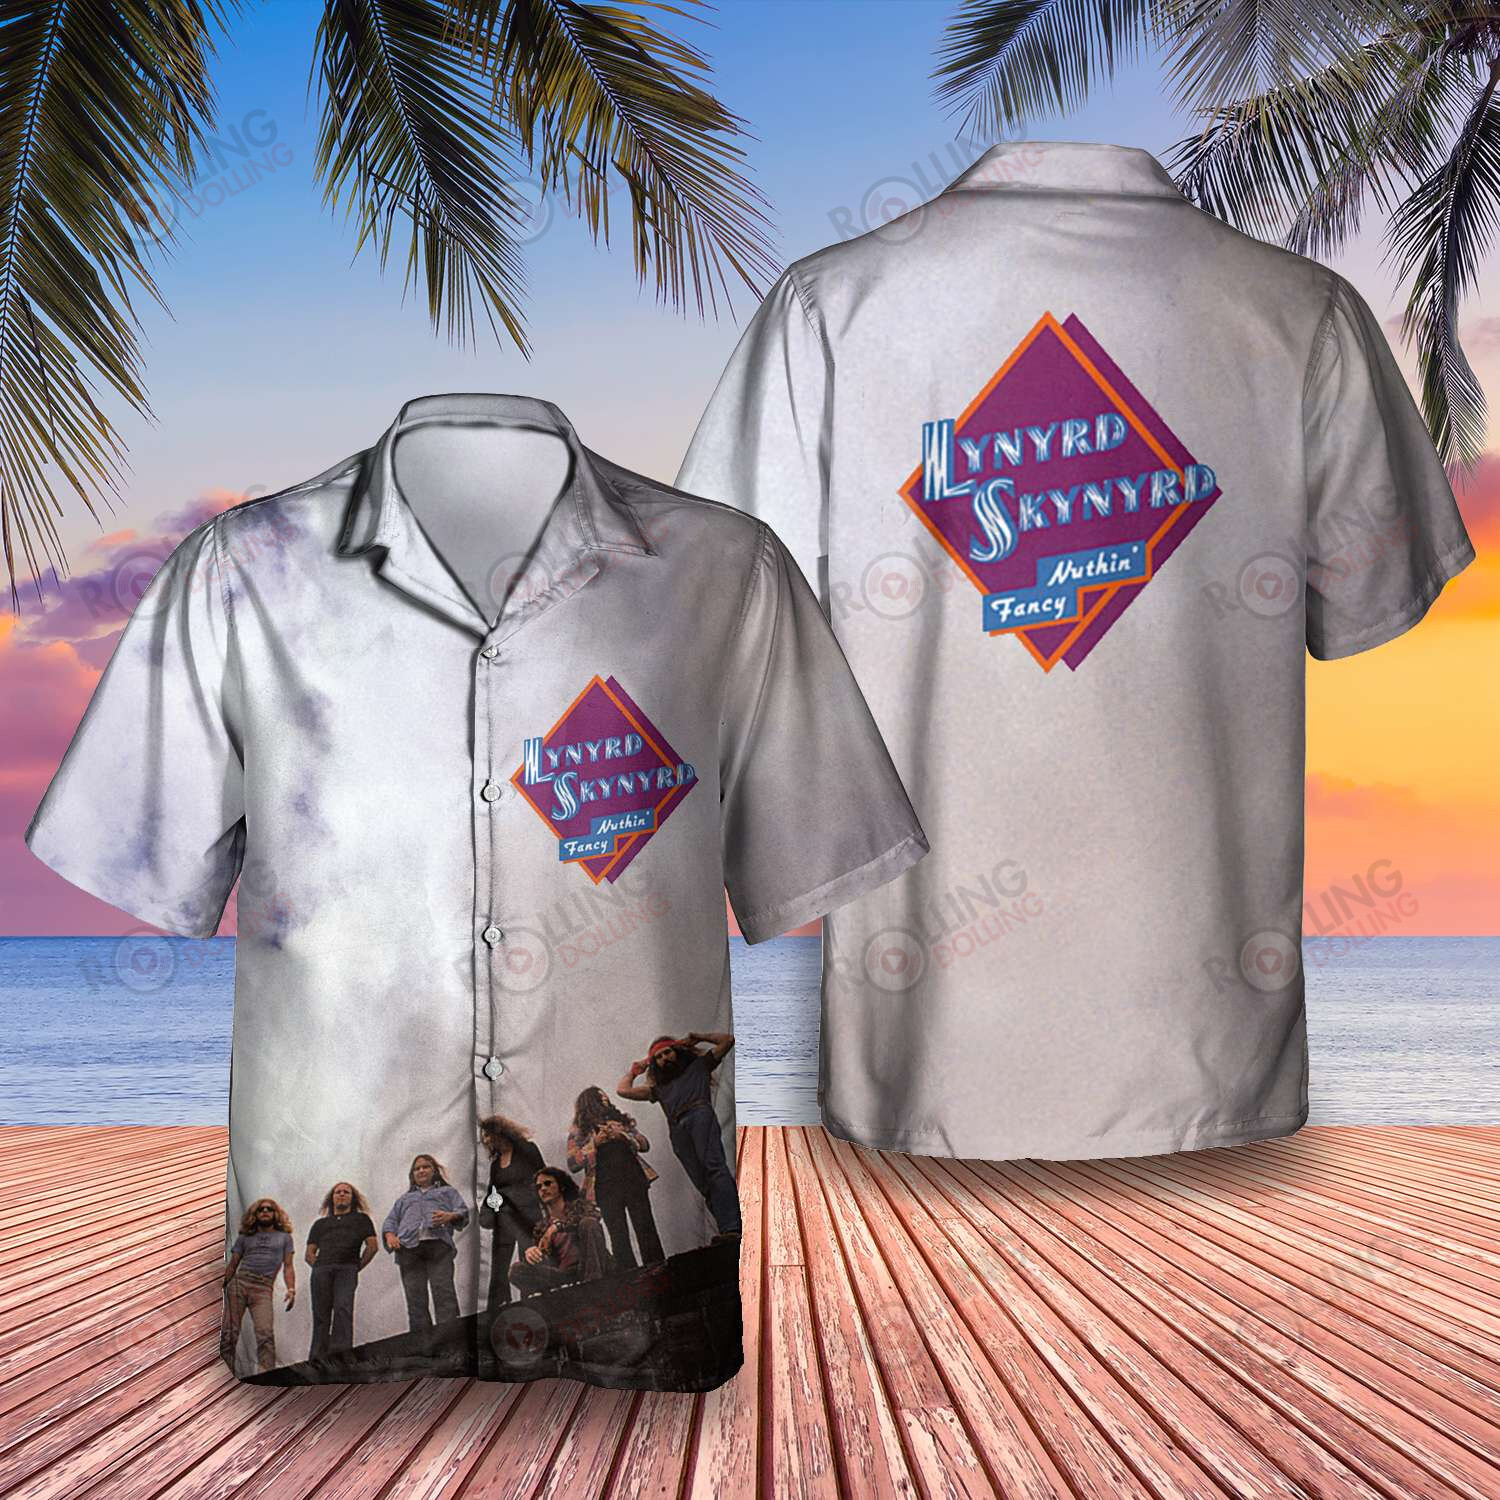 Regardless of their style, you will feel comfortable wearing Hawaiian Shirt 95